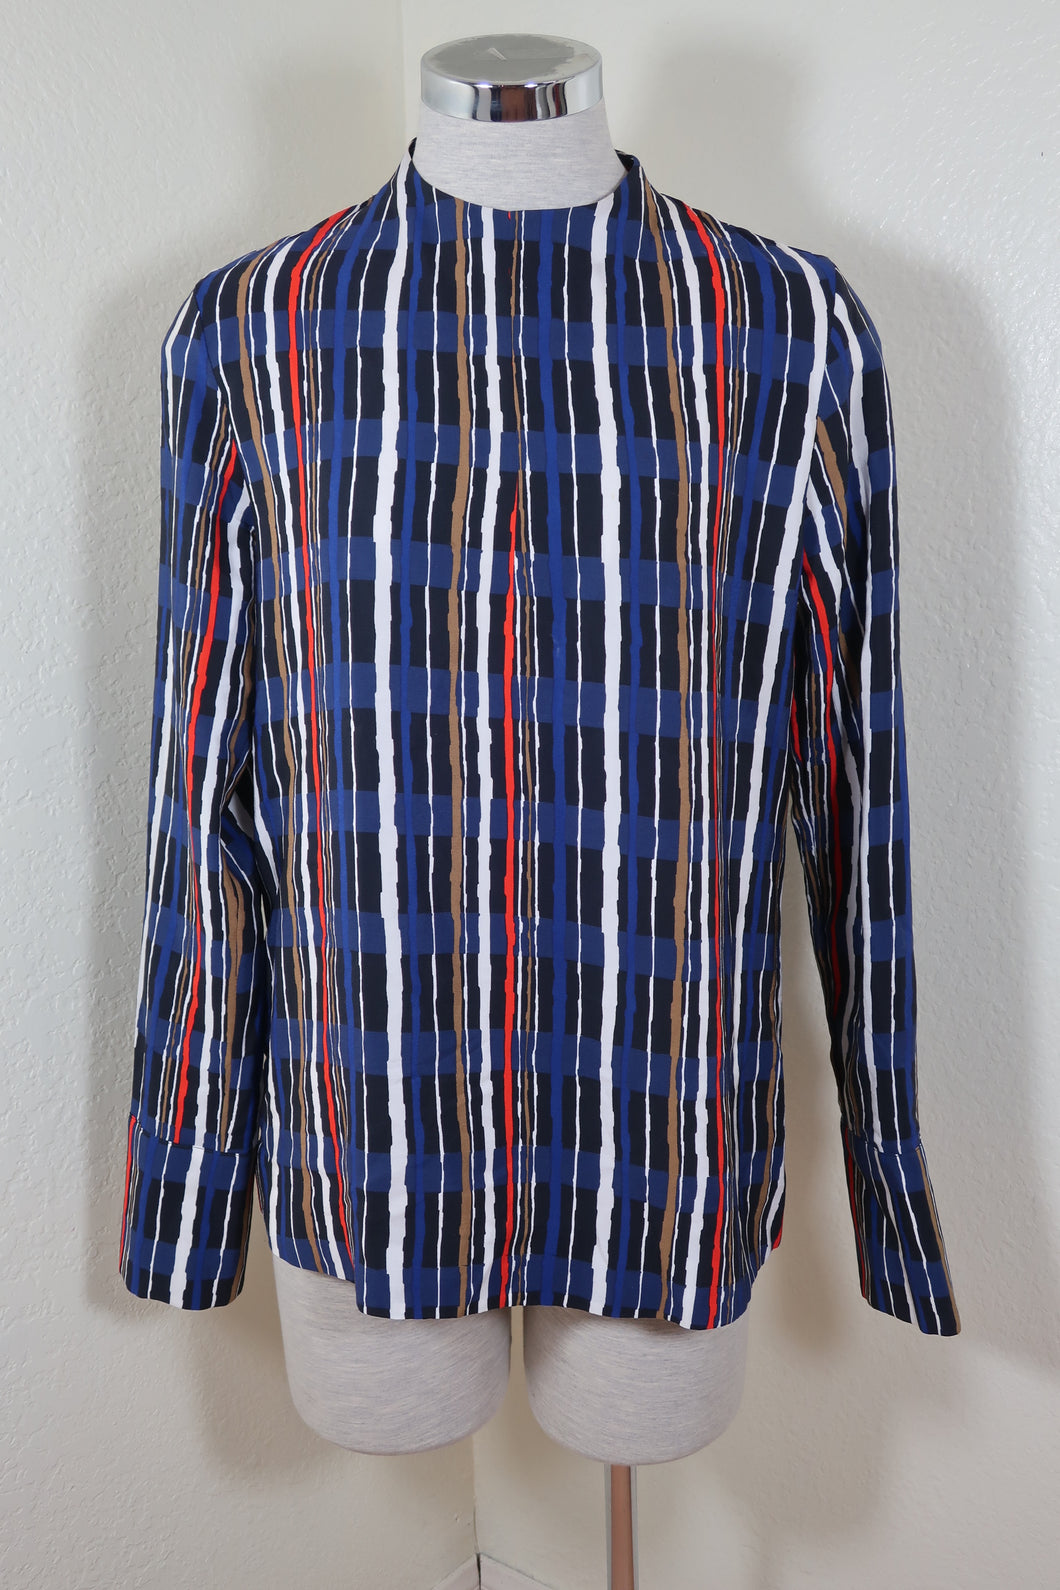 MARNI Italy Blouse Silk Crepe Shades Print Striped Long Sleeve Top Blouse 40 4 5 6 S Small